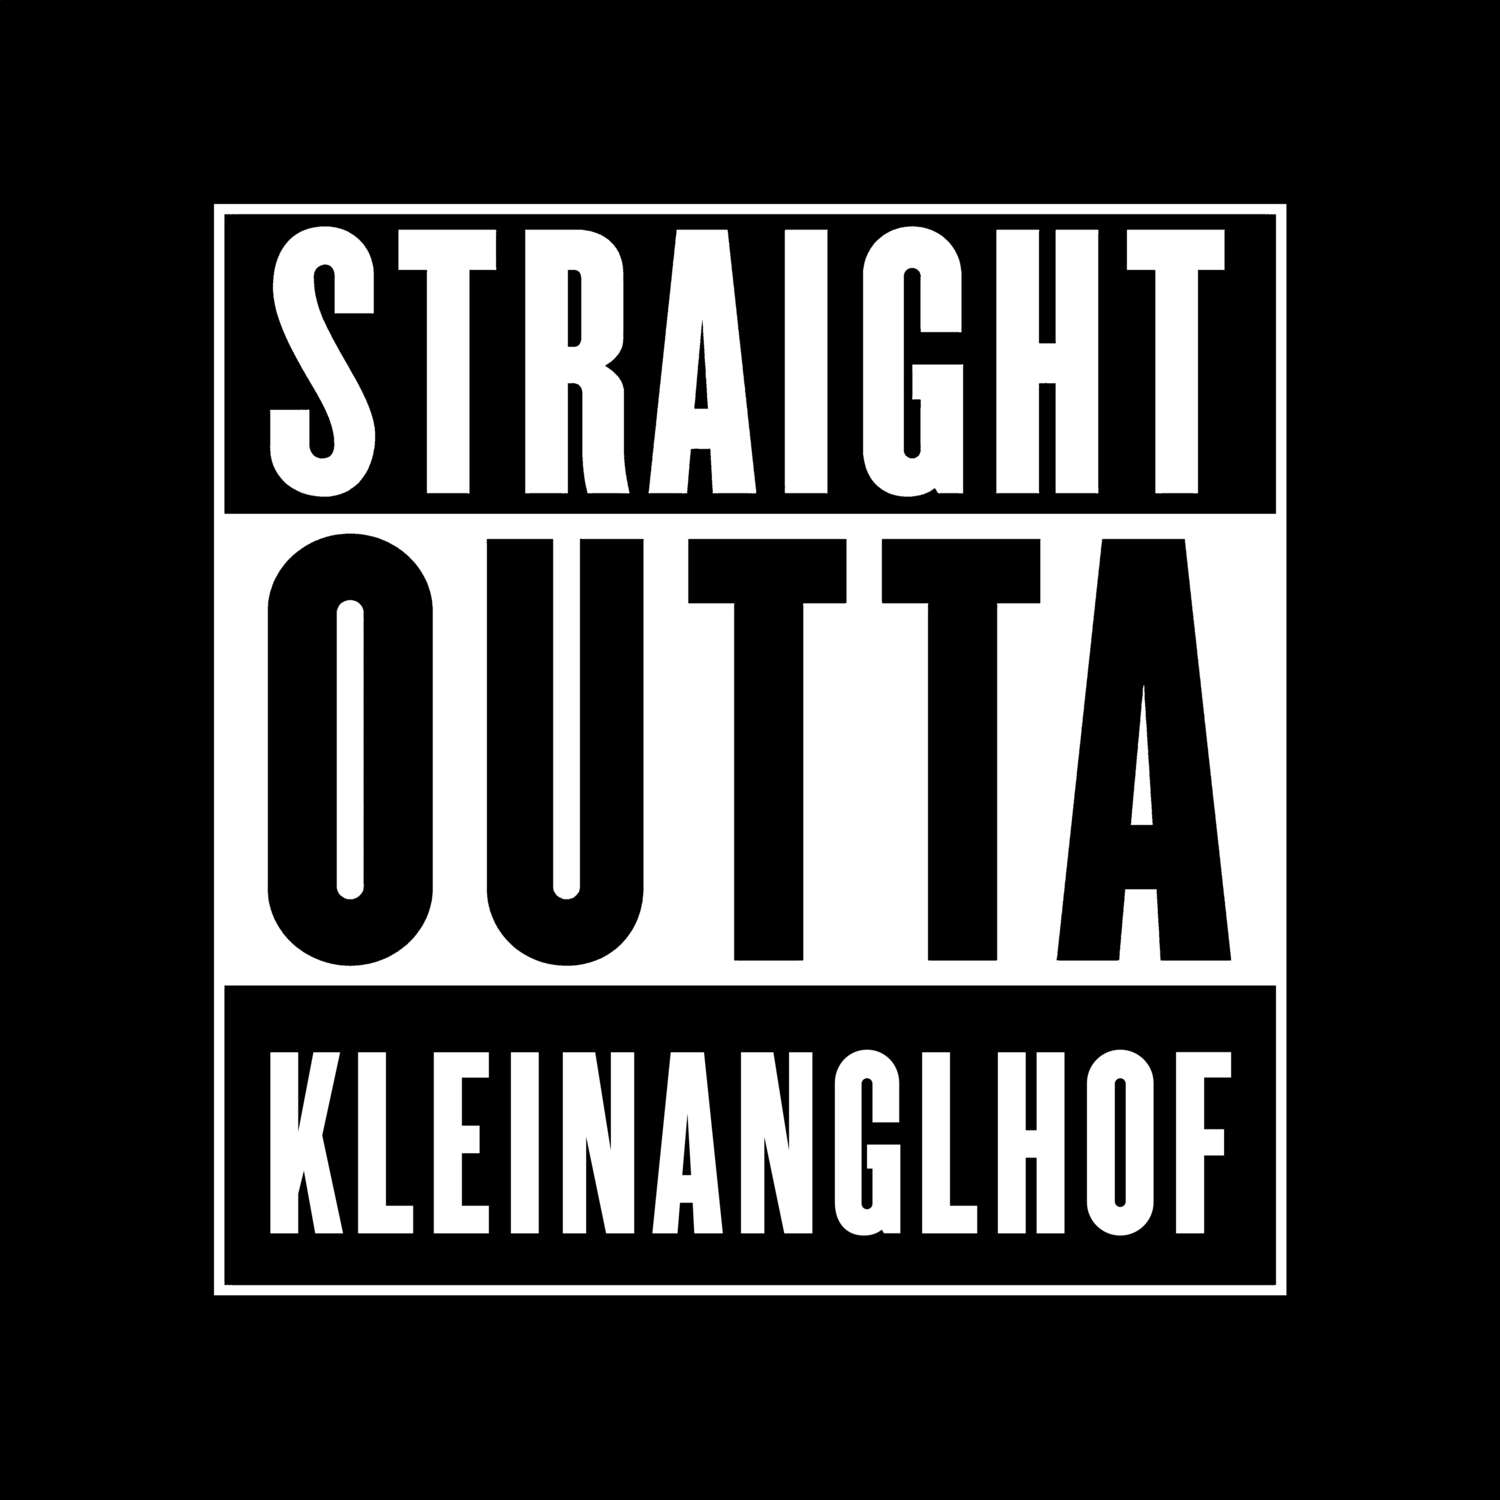 Kleinanglhof T-Shirt »Straight Outta«